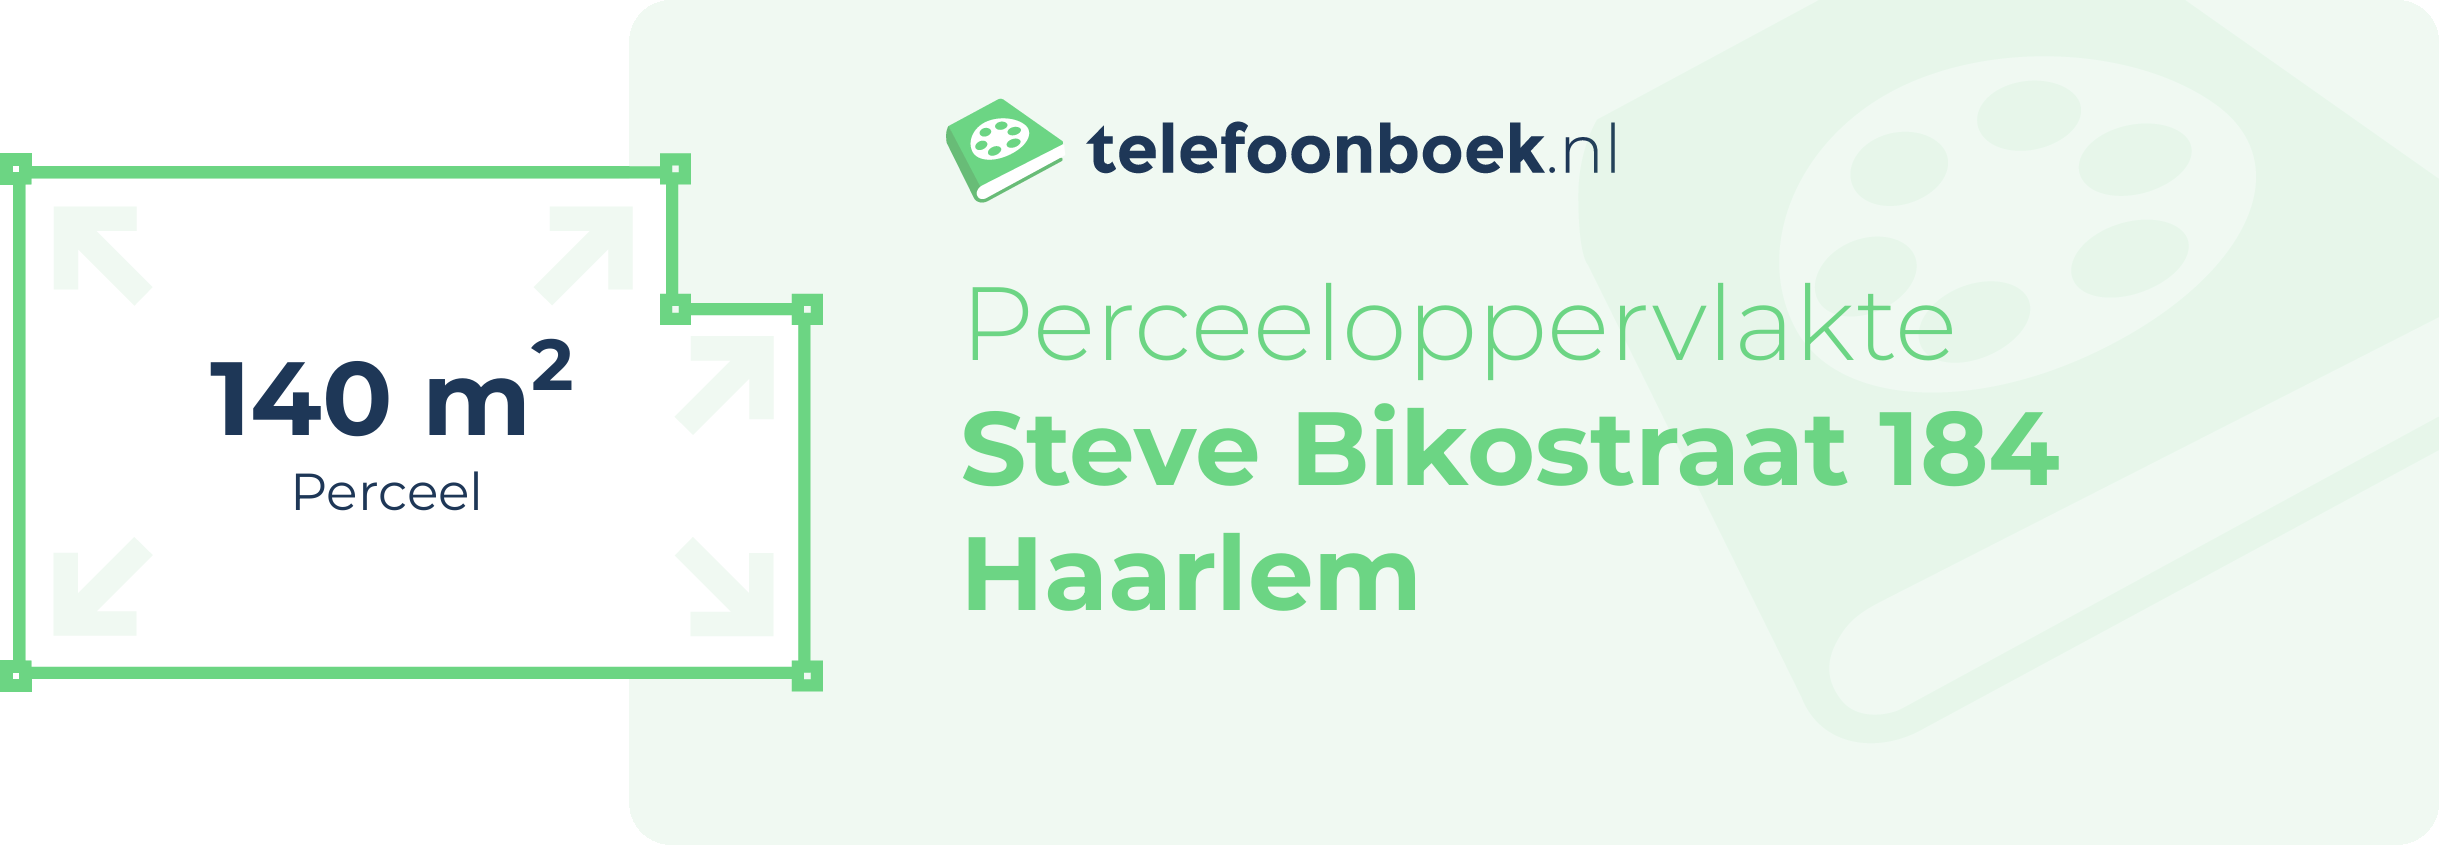 Perceeloppervlakte Steve Bikostraat 184 Haarlem